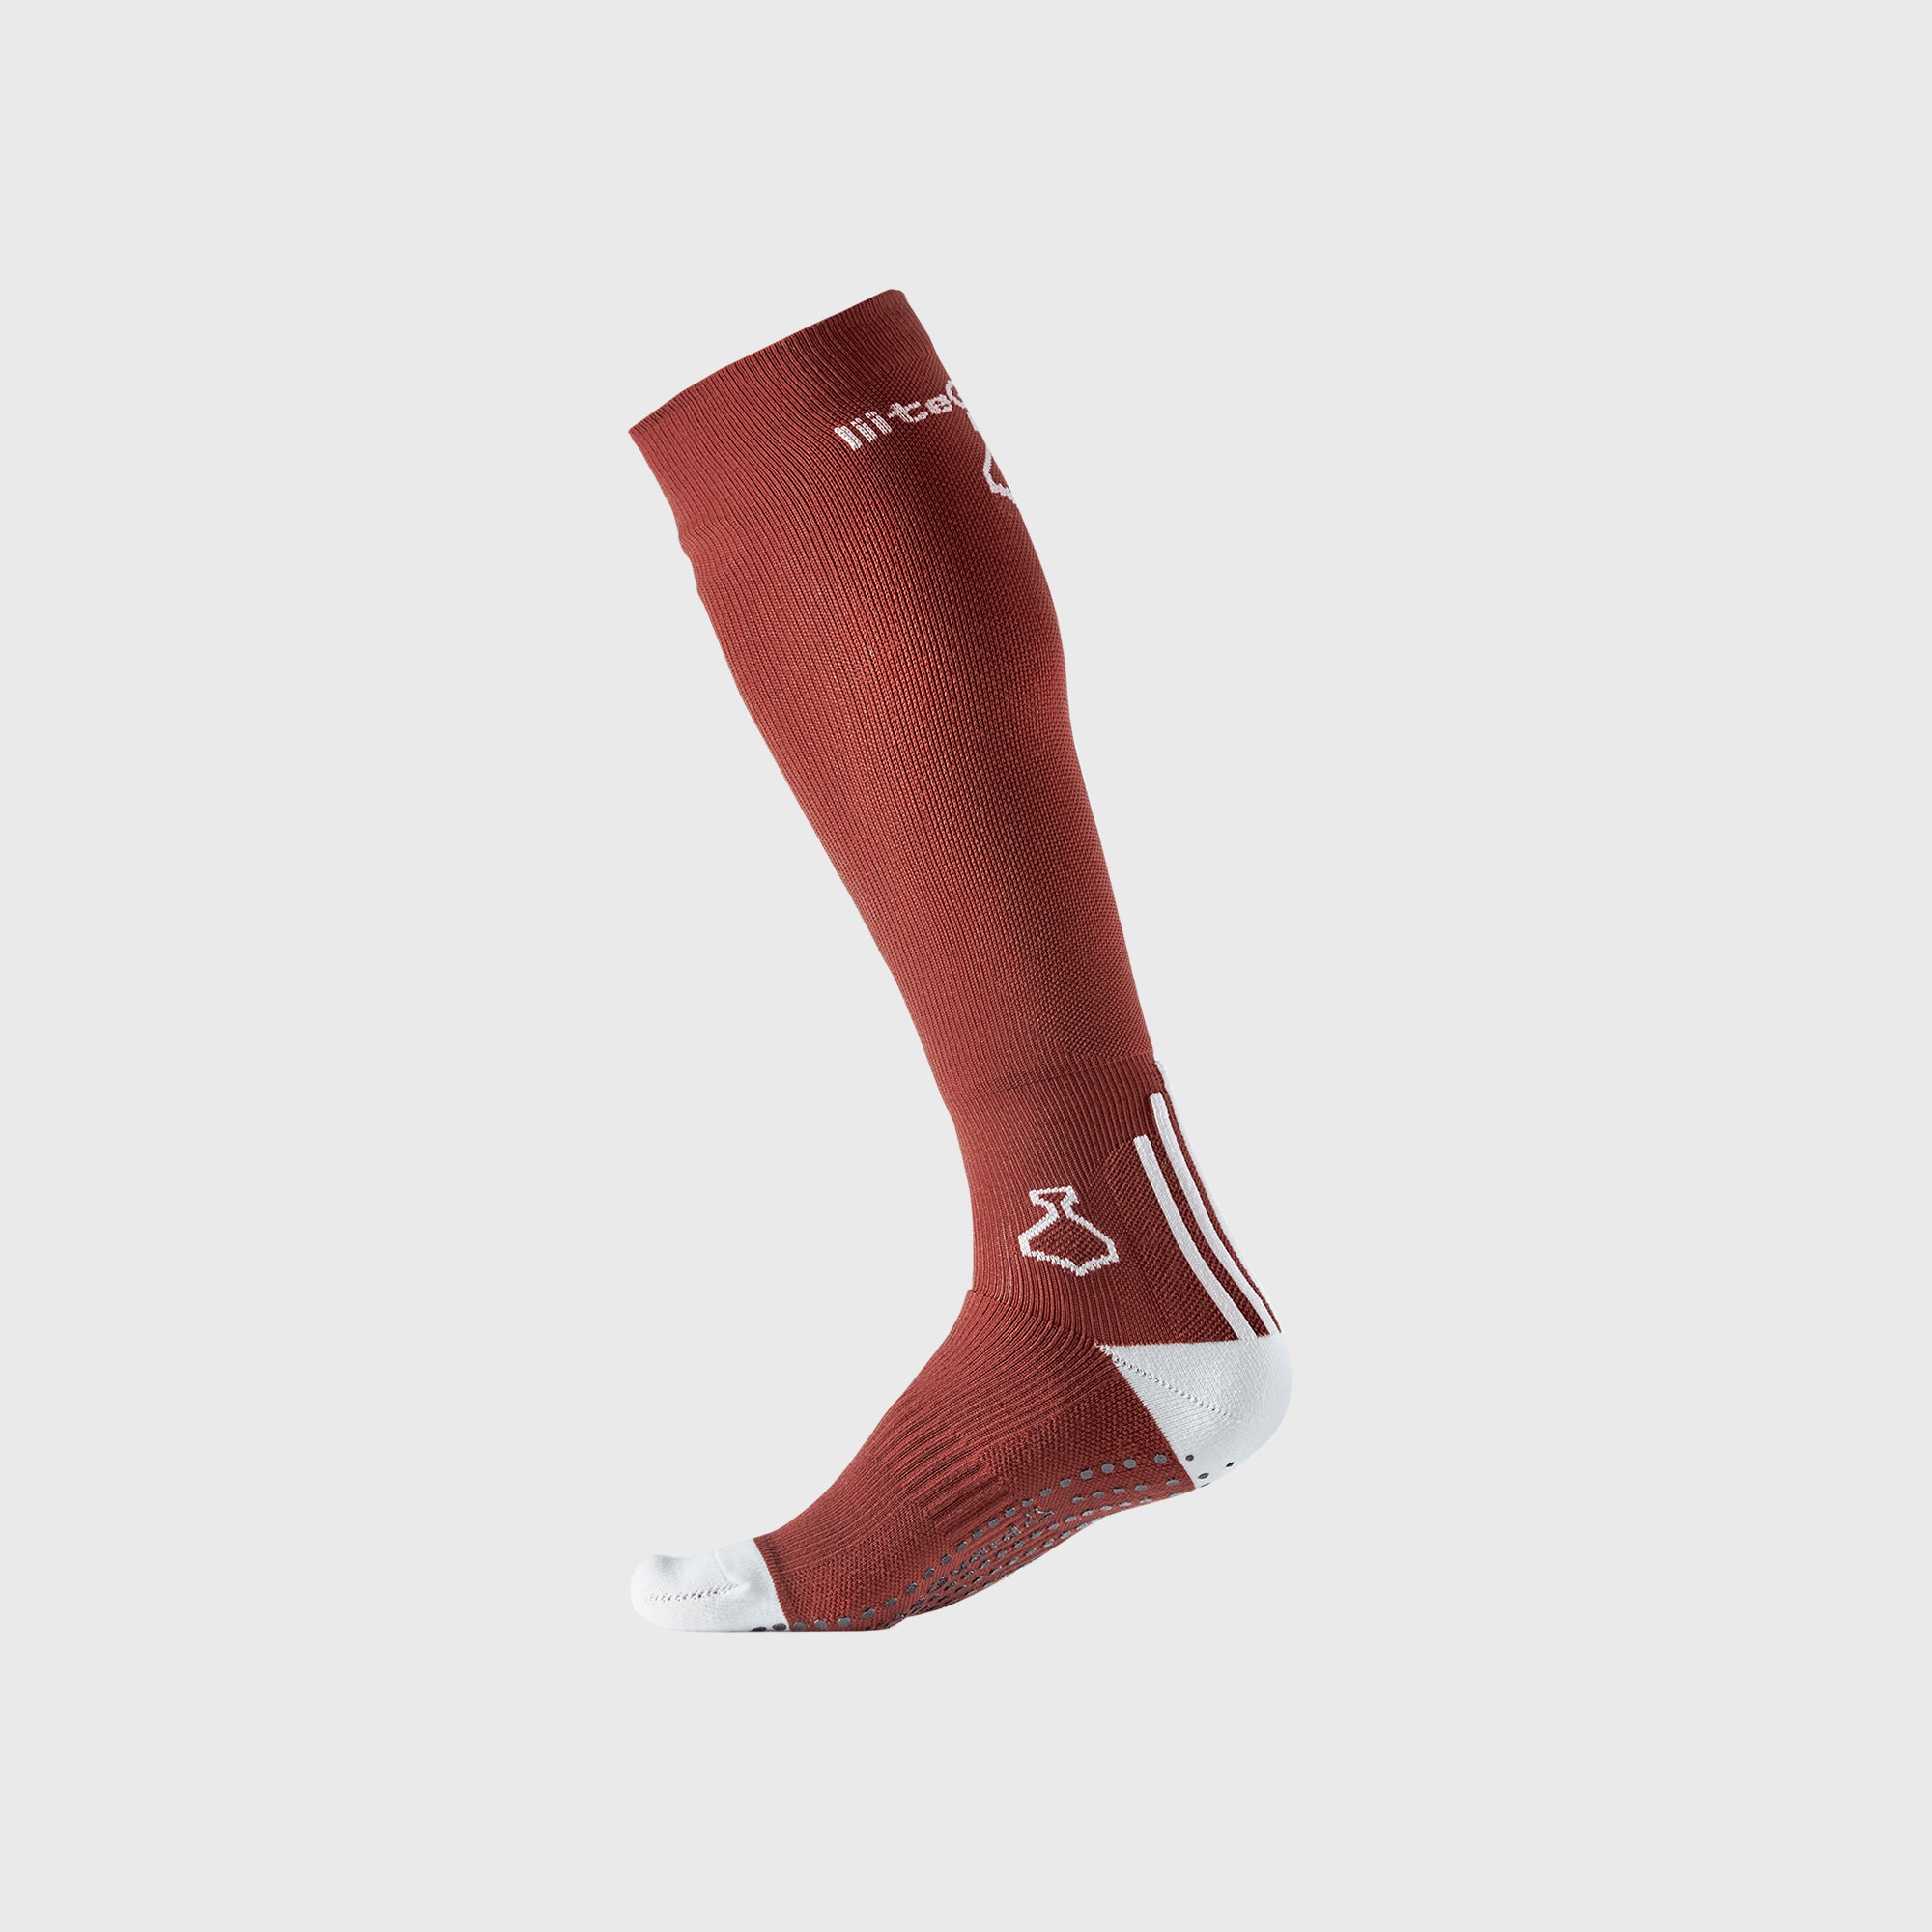 Liiteguard PERFORMANCE SOCK Long socks DARK RED